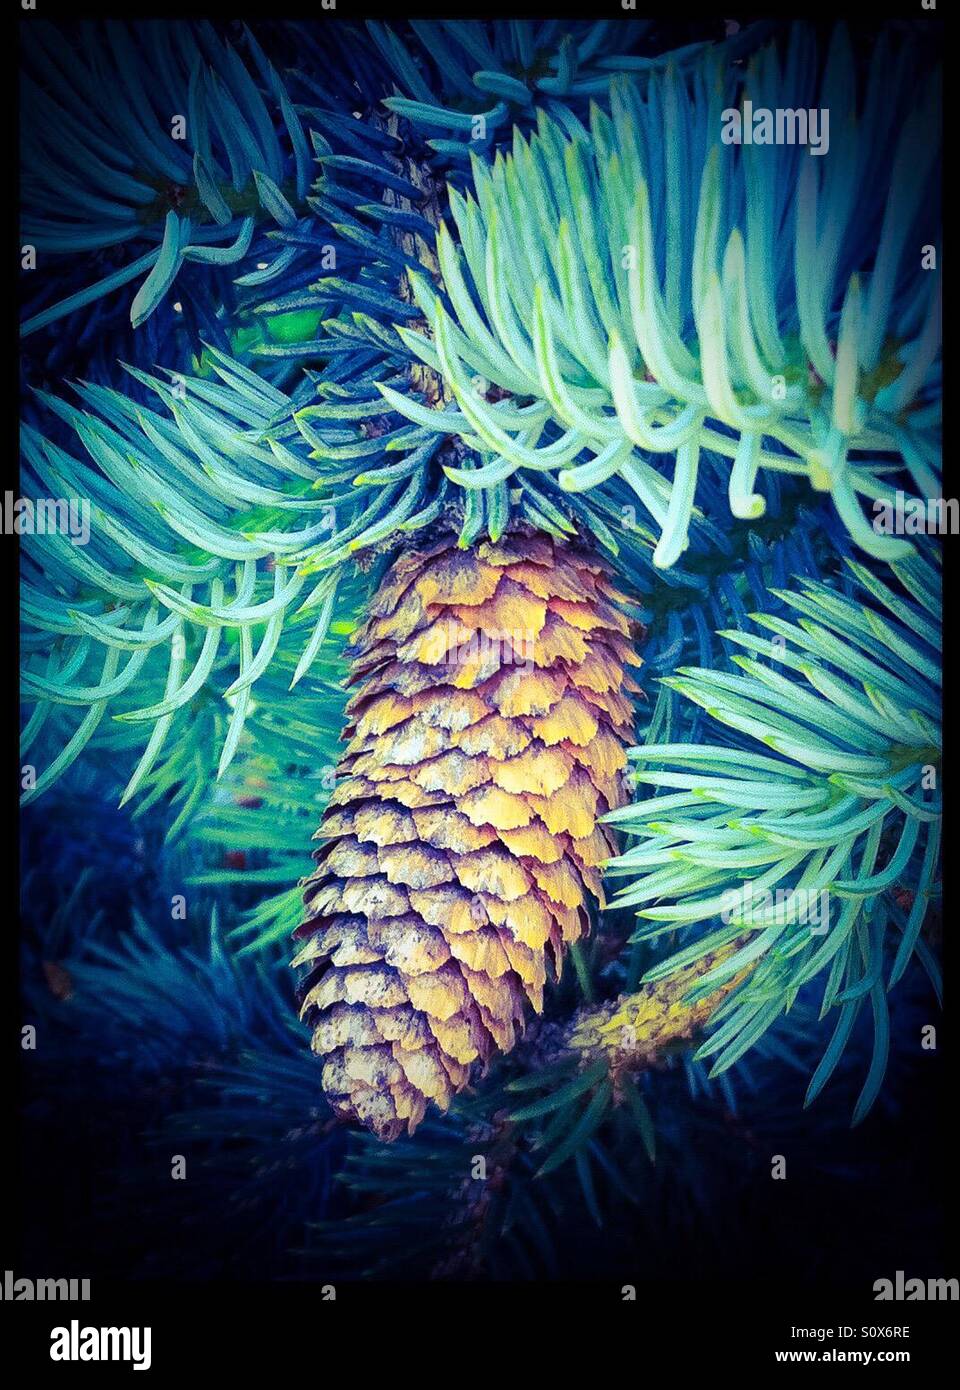 Pine cone Stock Photo